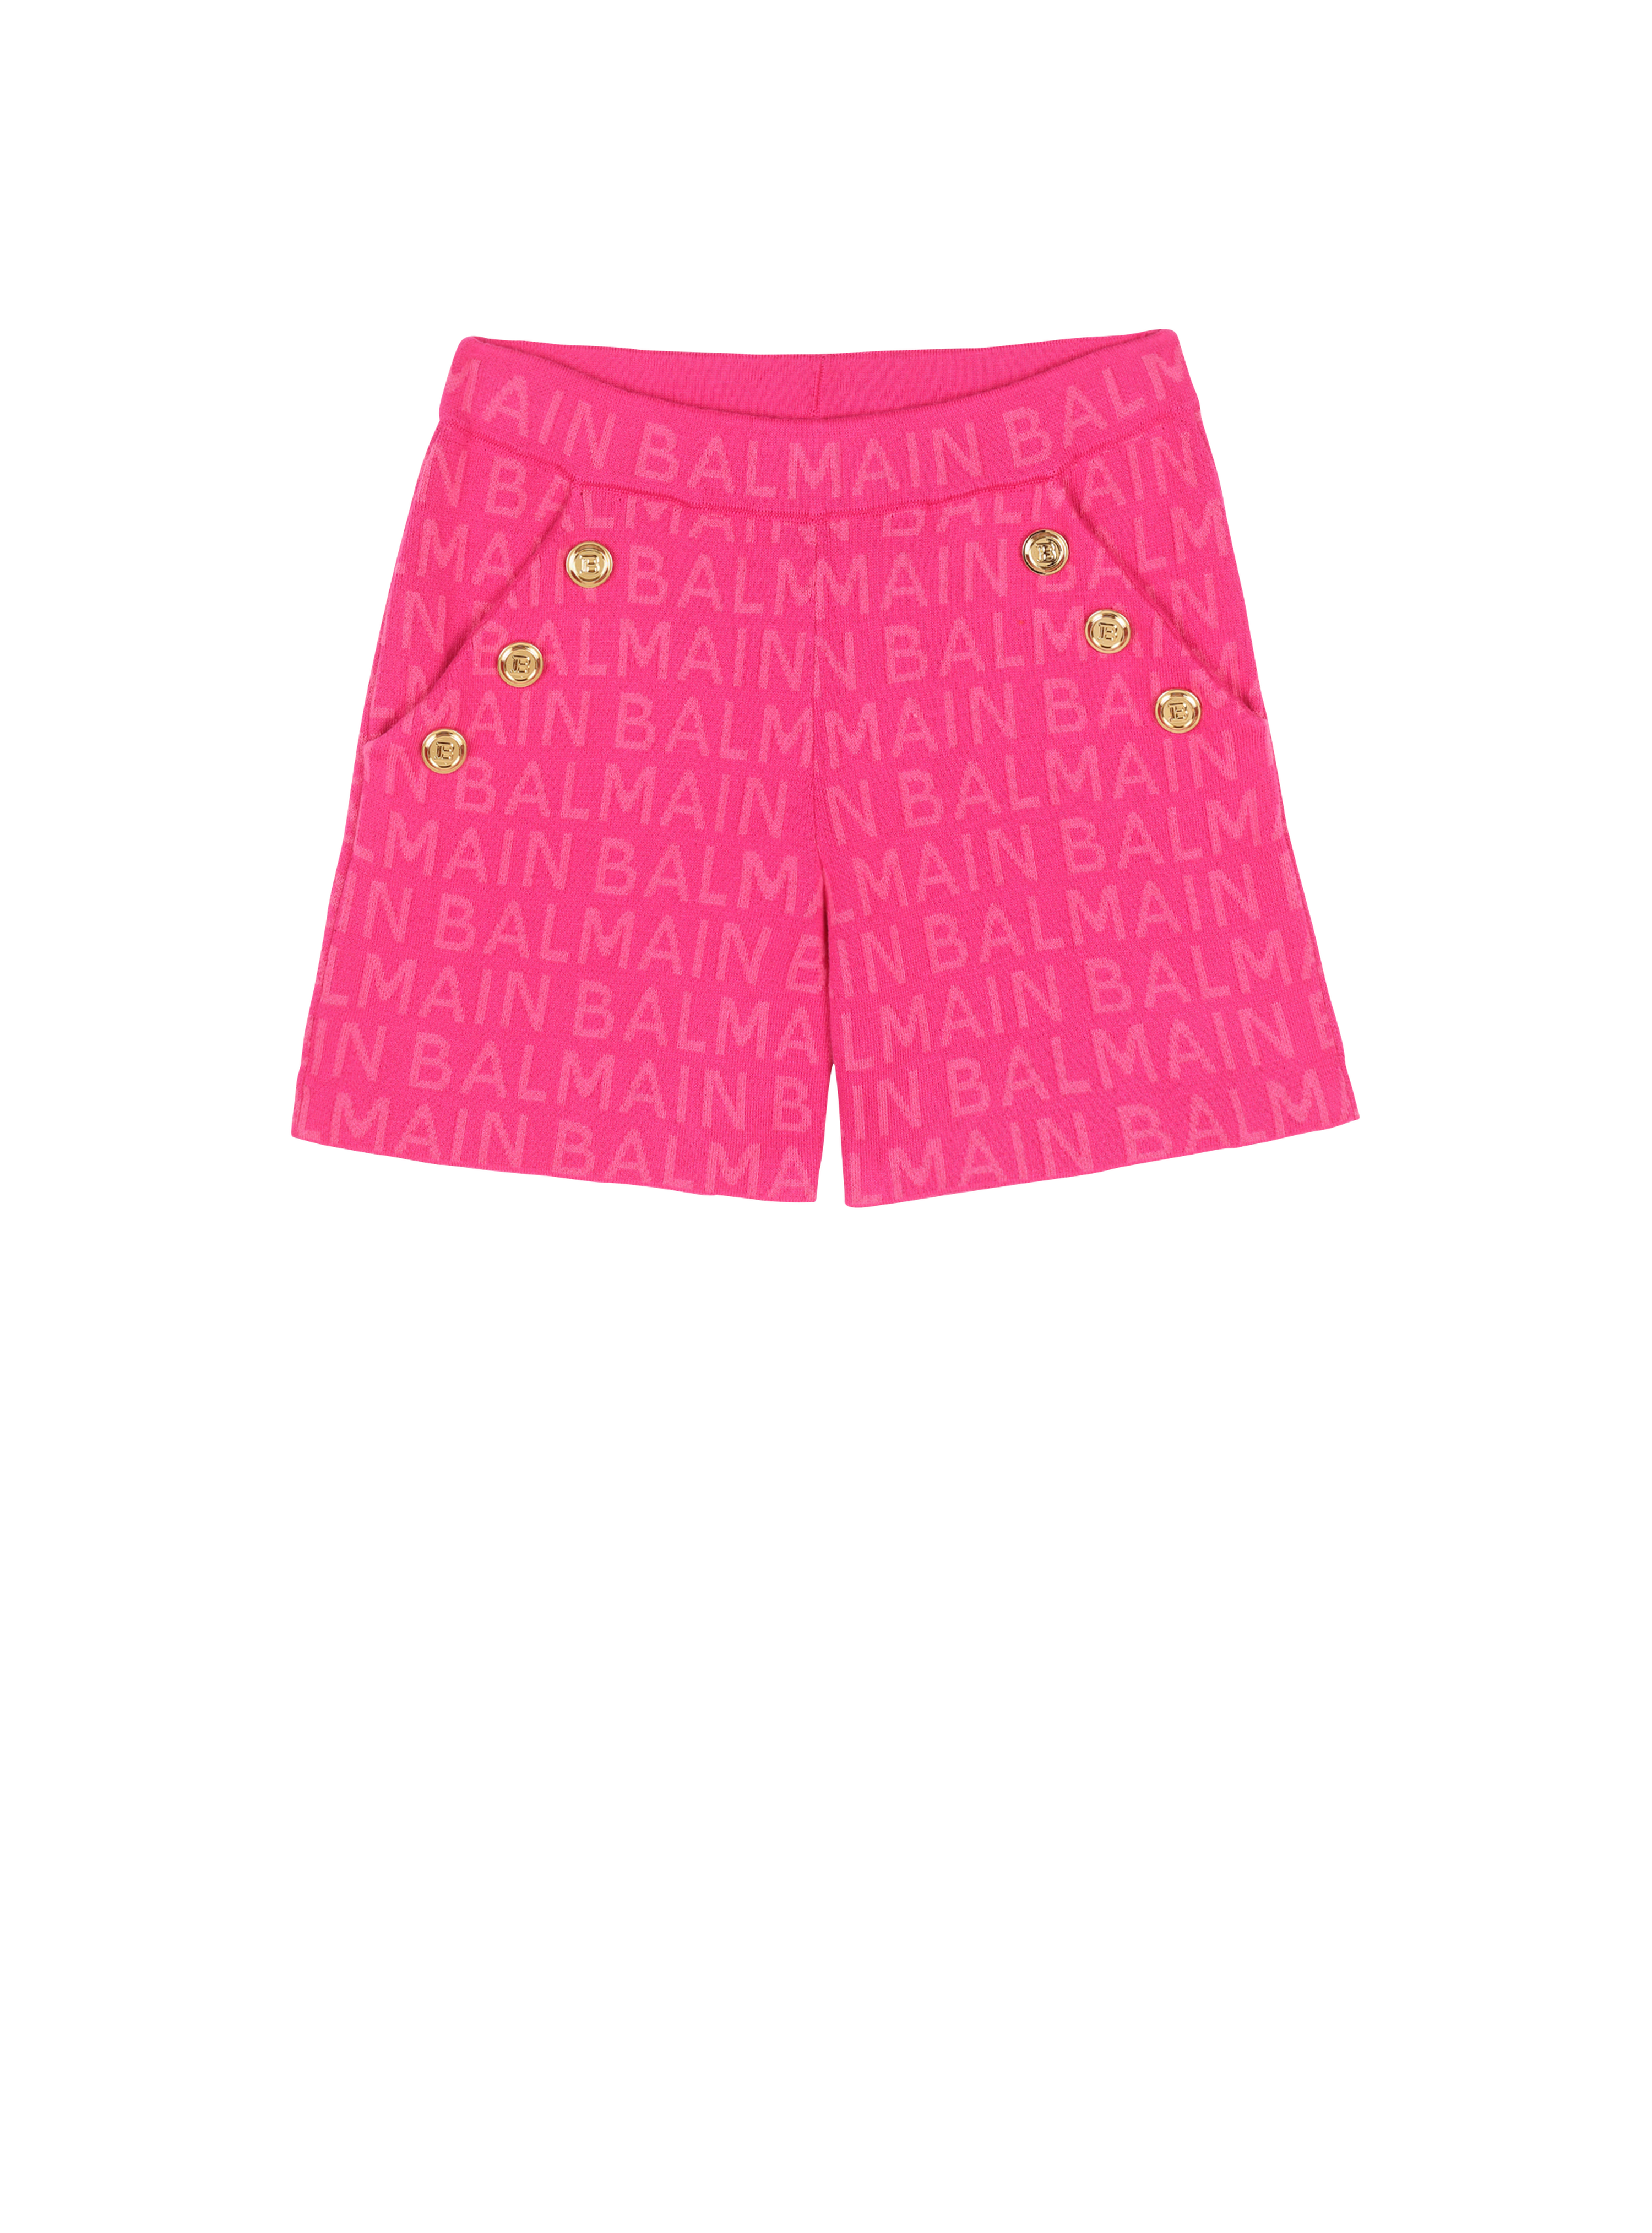 Balmain巴尔曼标志棉质短裤, pink